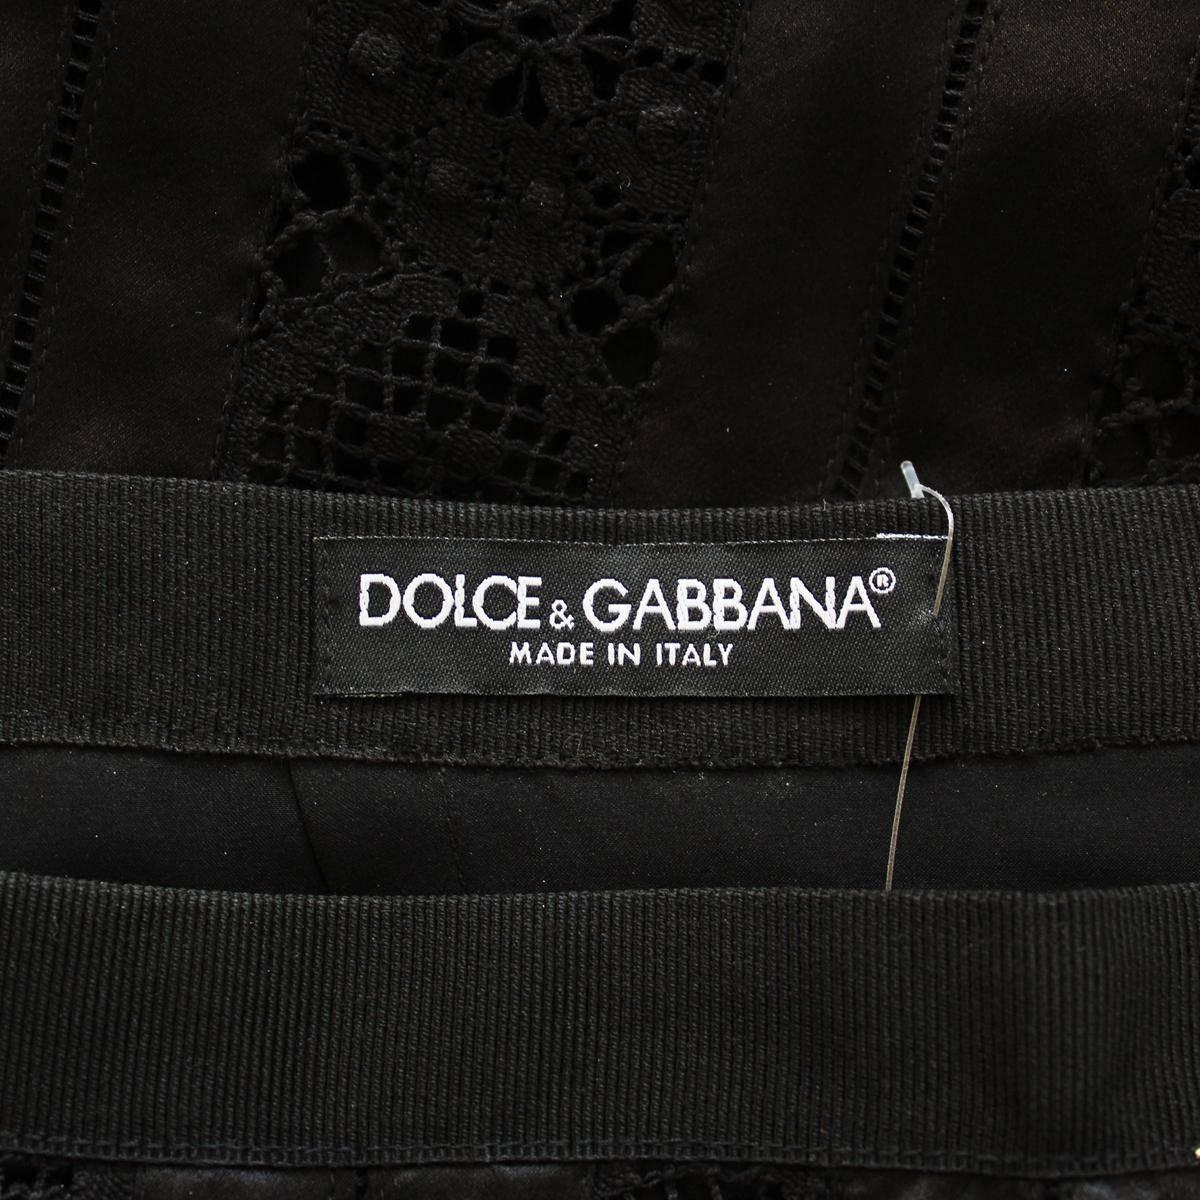 Dolce & Gabbana Lace Silk Skirt Size 40 In Excellent Condition For Sale In Gazzaniga (BG), IT